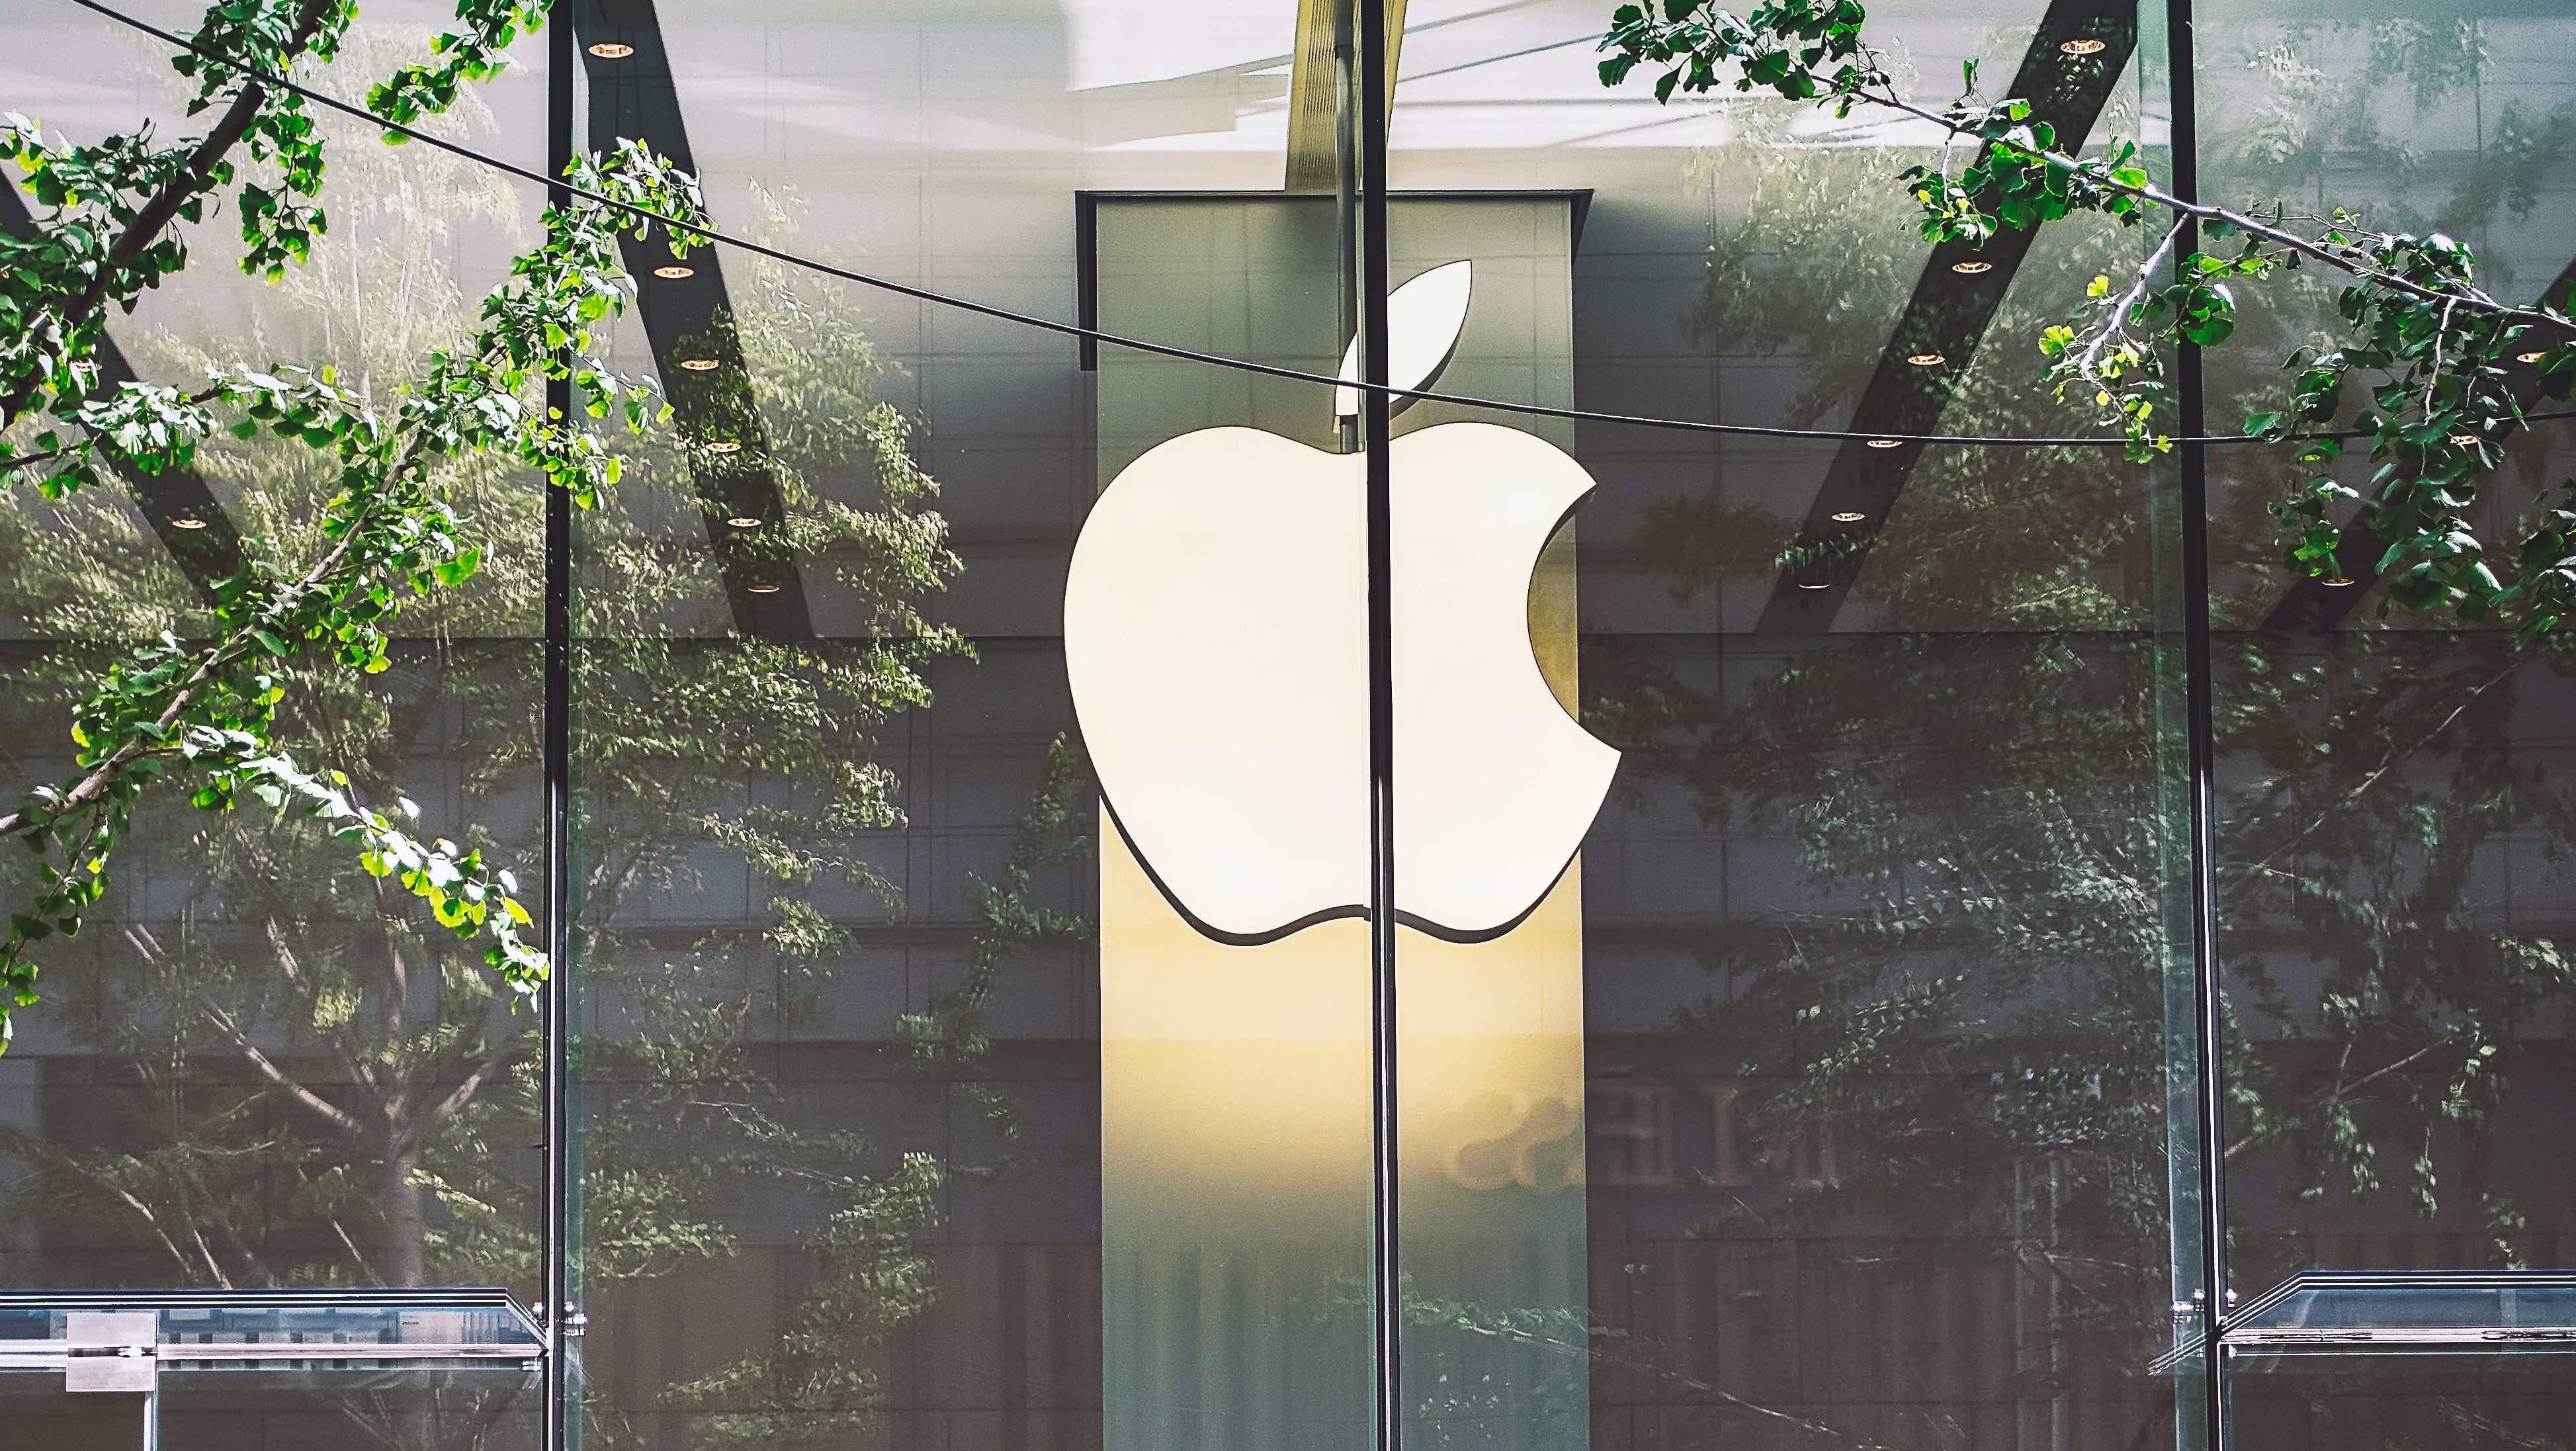 Apple store with apple logo on windows.